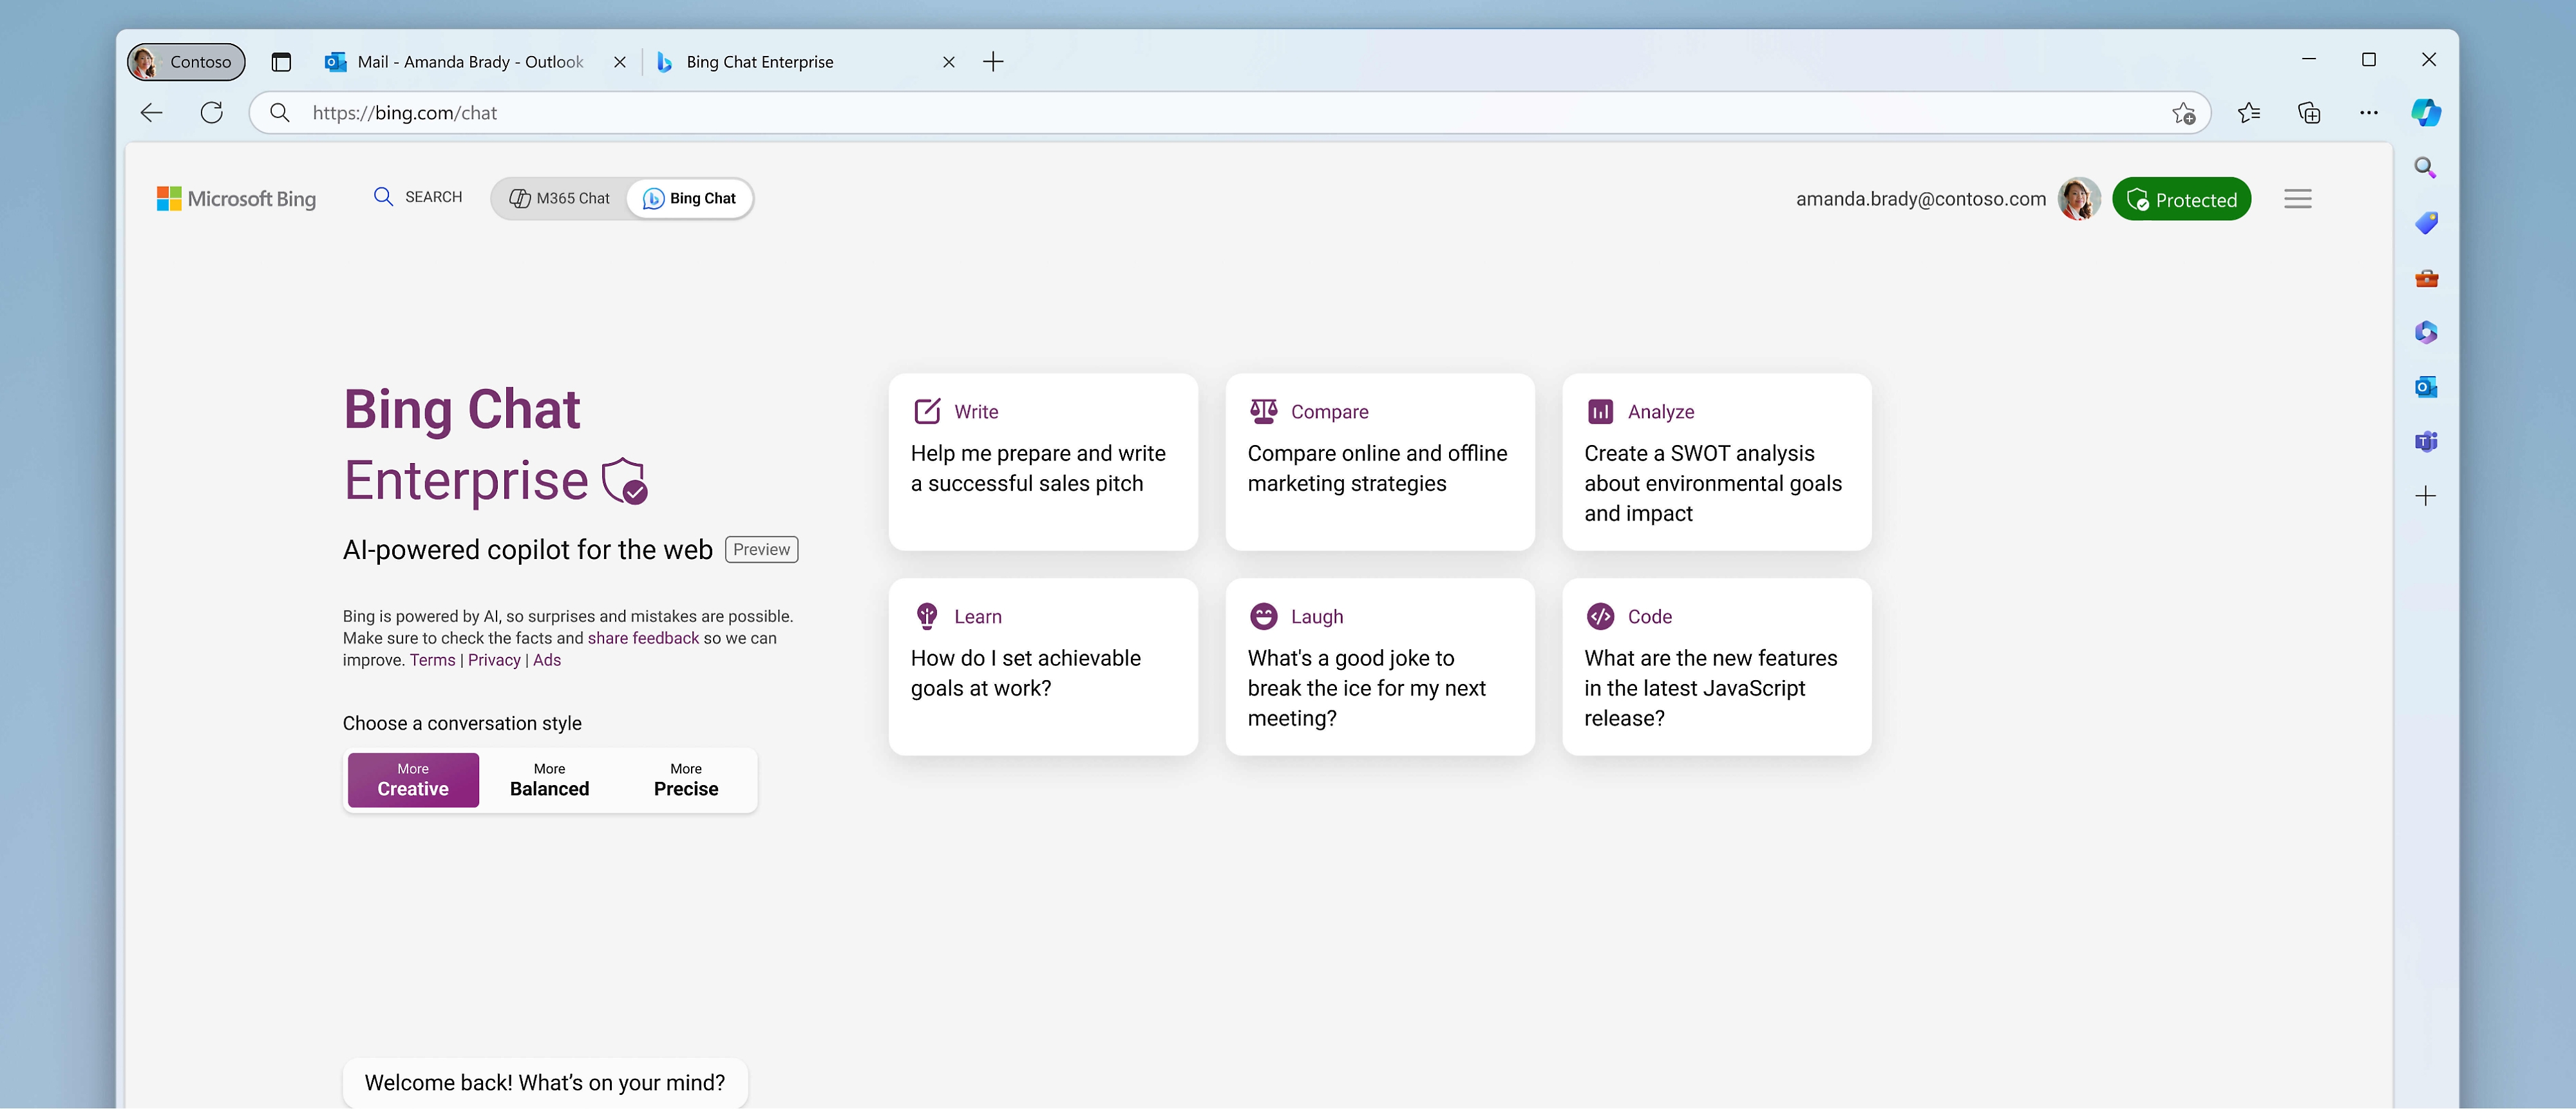 A screenshot of Bing Chat Enterprise